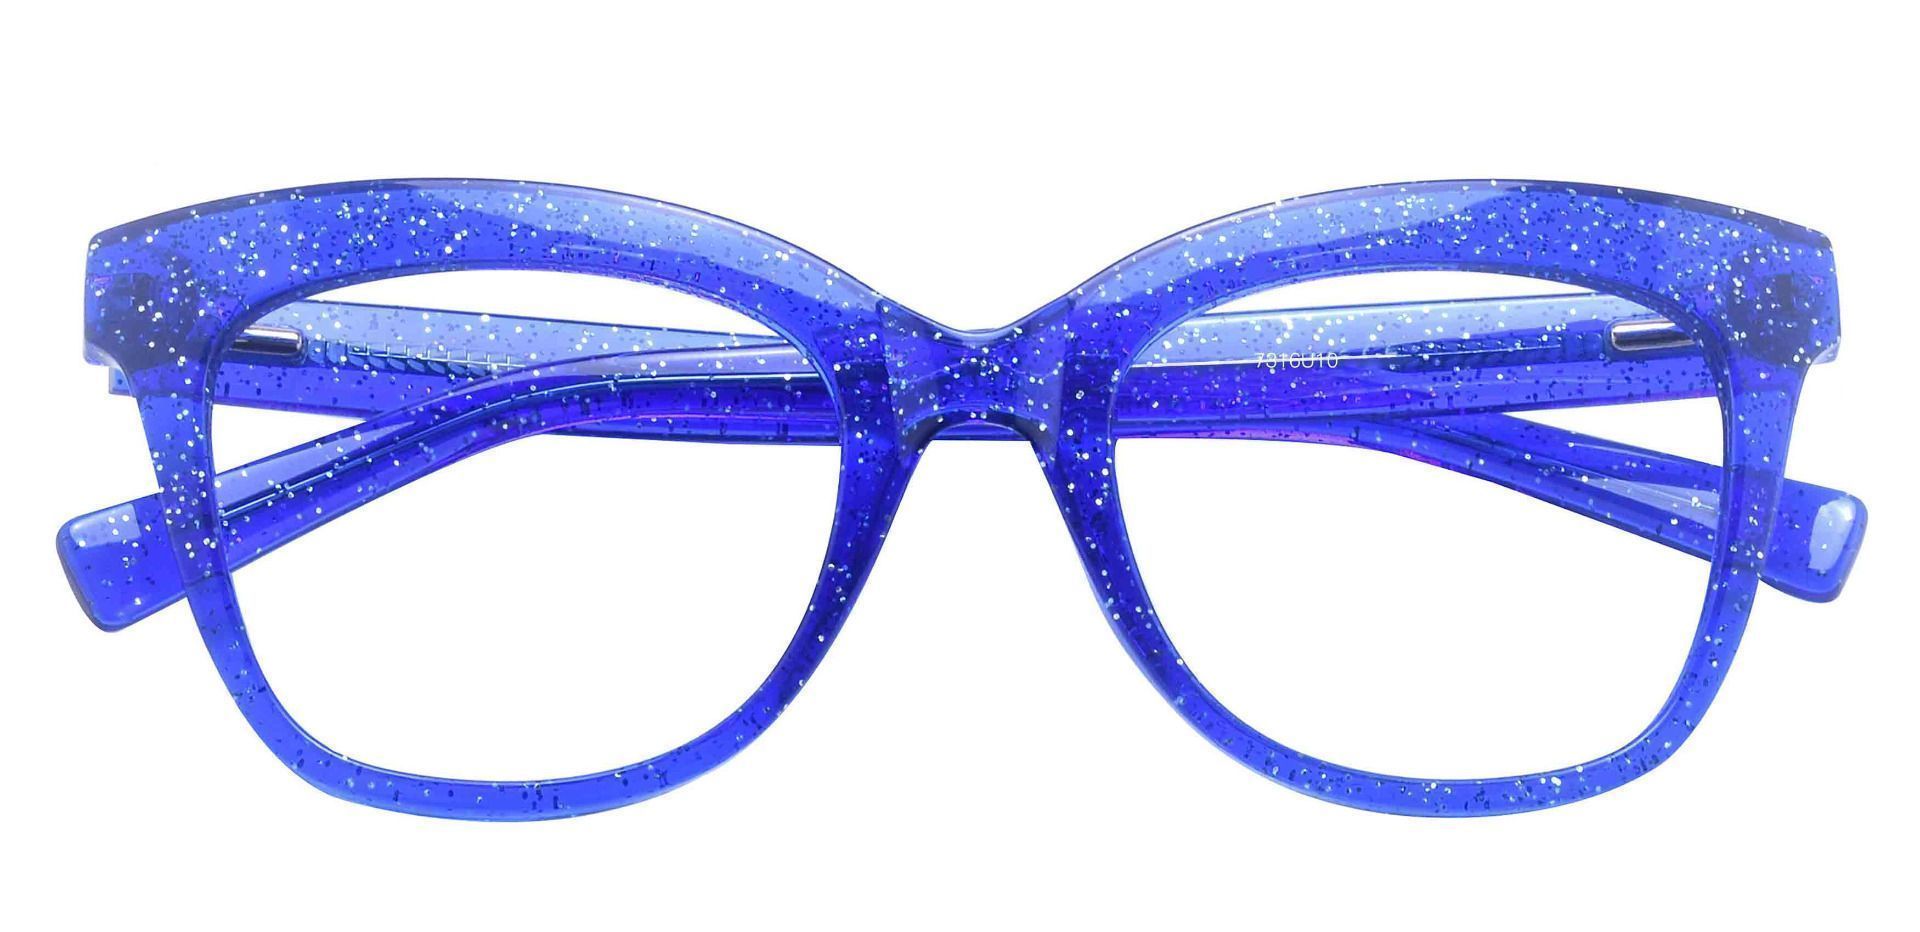 Knox Cat Eye Prescription Glasses - Blue